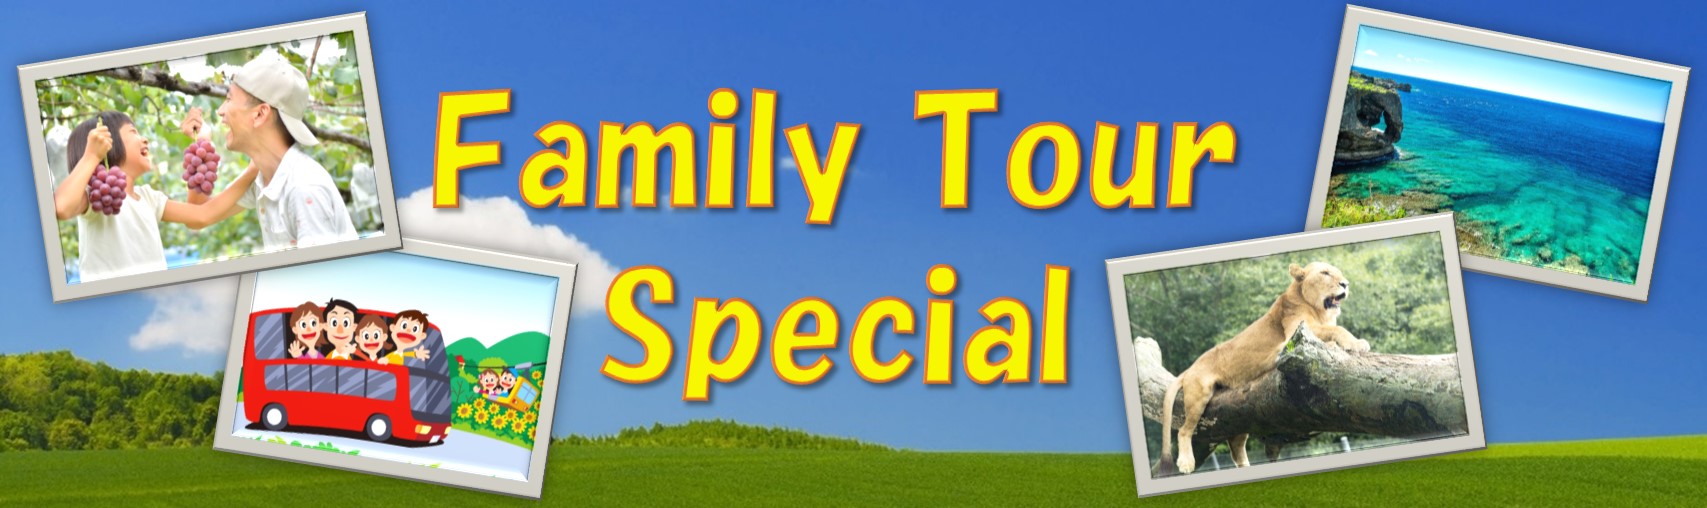 Family Tour Special